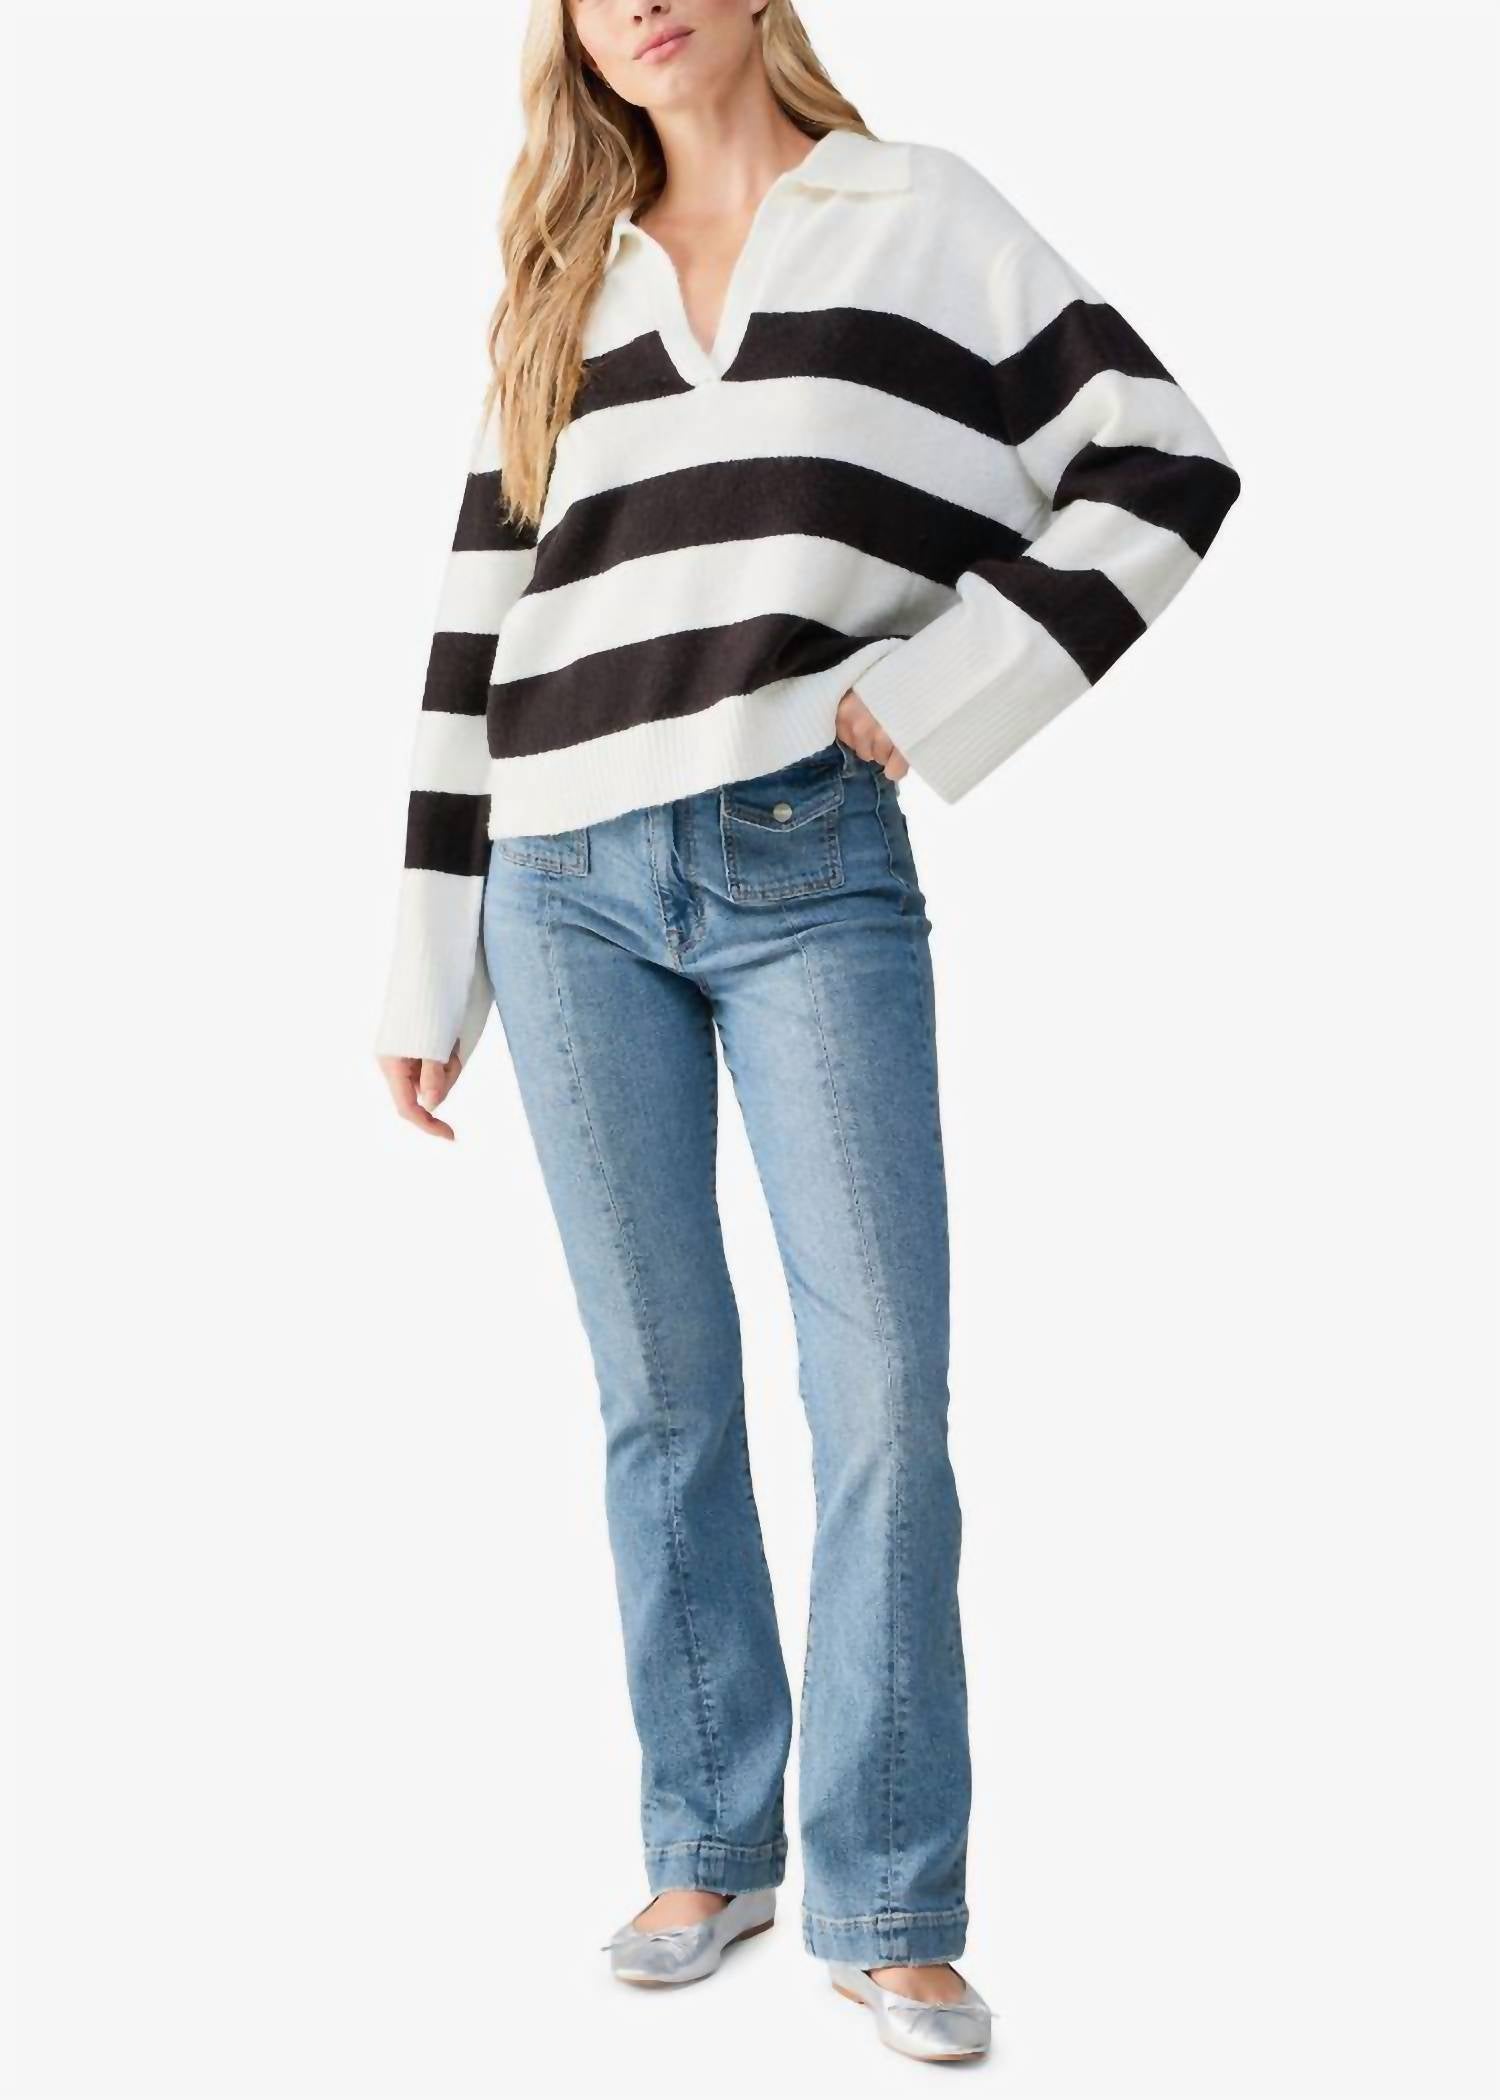 Sanctuary Johnny Collared Sweater In Black/white Stripe